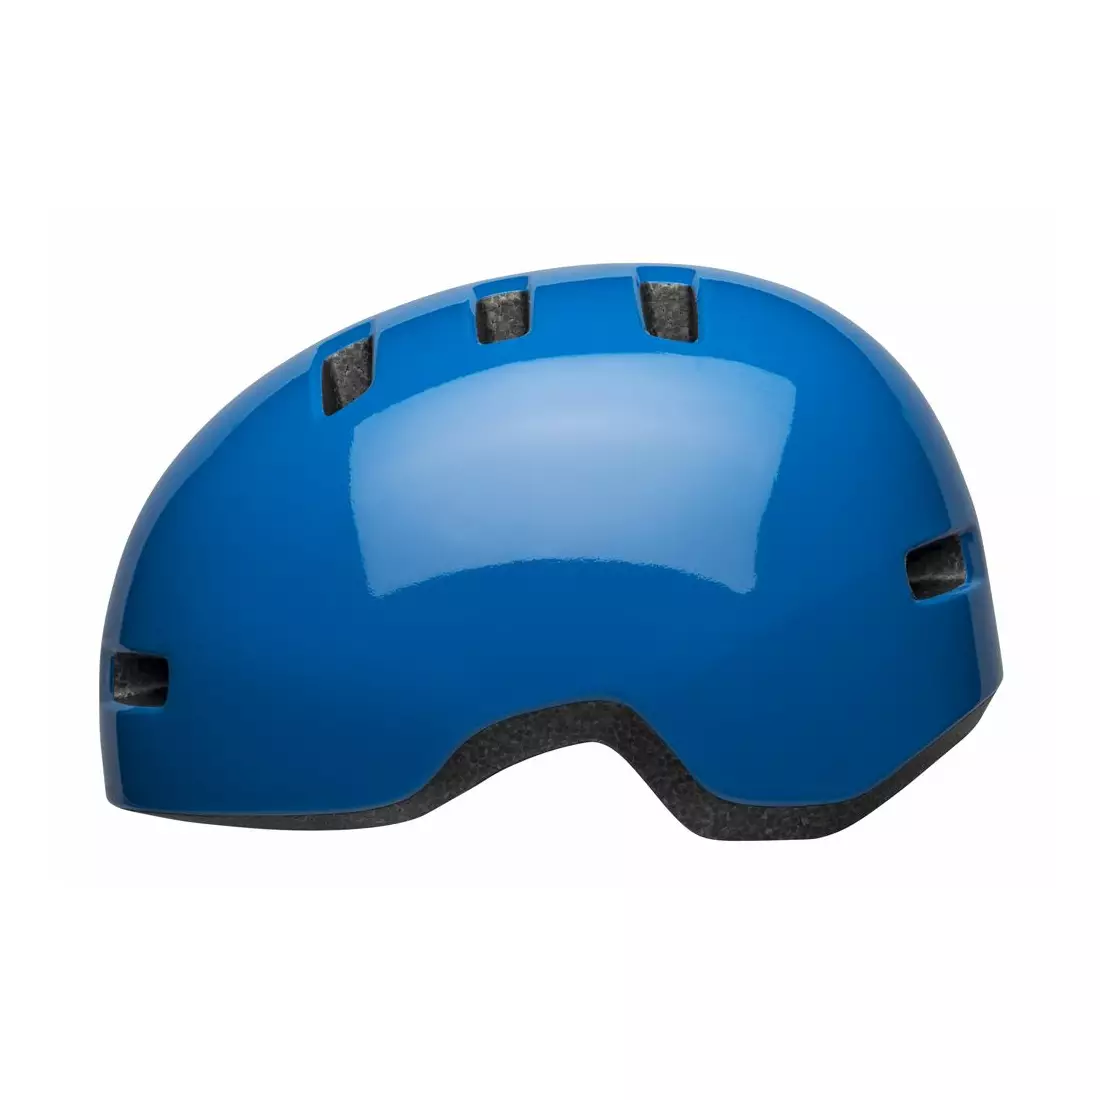 BELL LIL RIPPER children's bicycle helmet, gloss blue